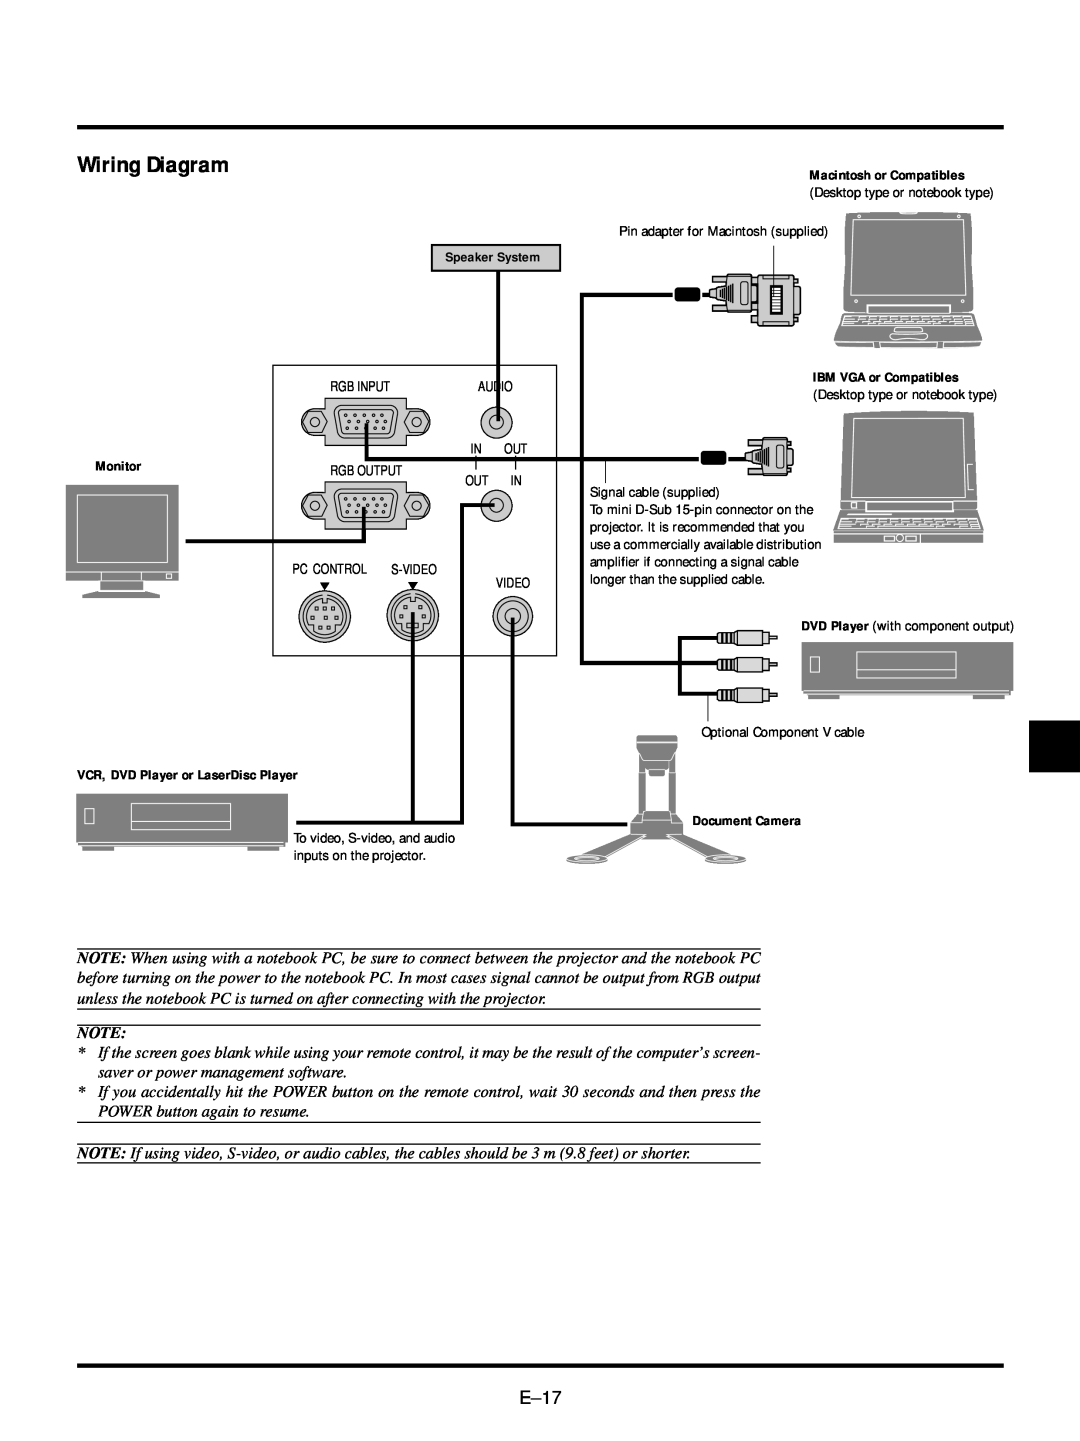 NEC VT540, VT440 user manual Wiring Diagram, E-17 